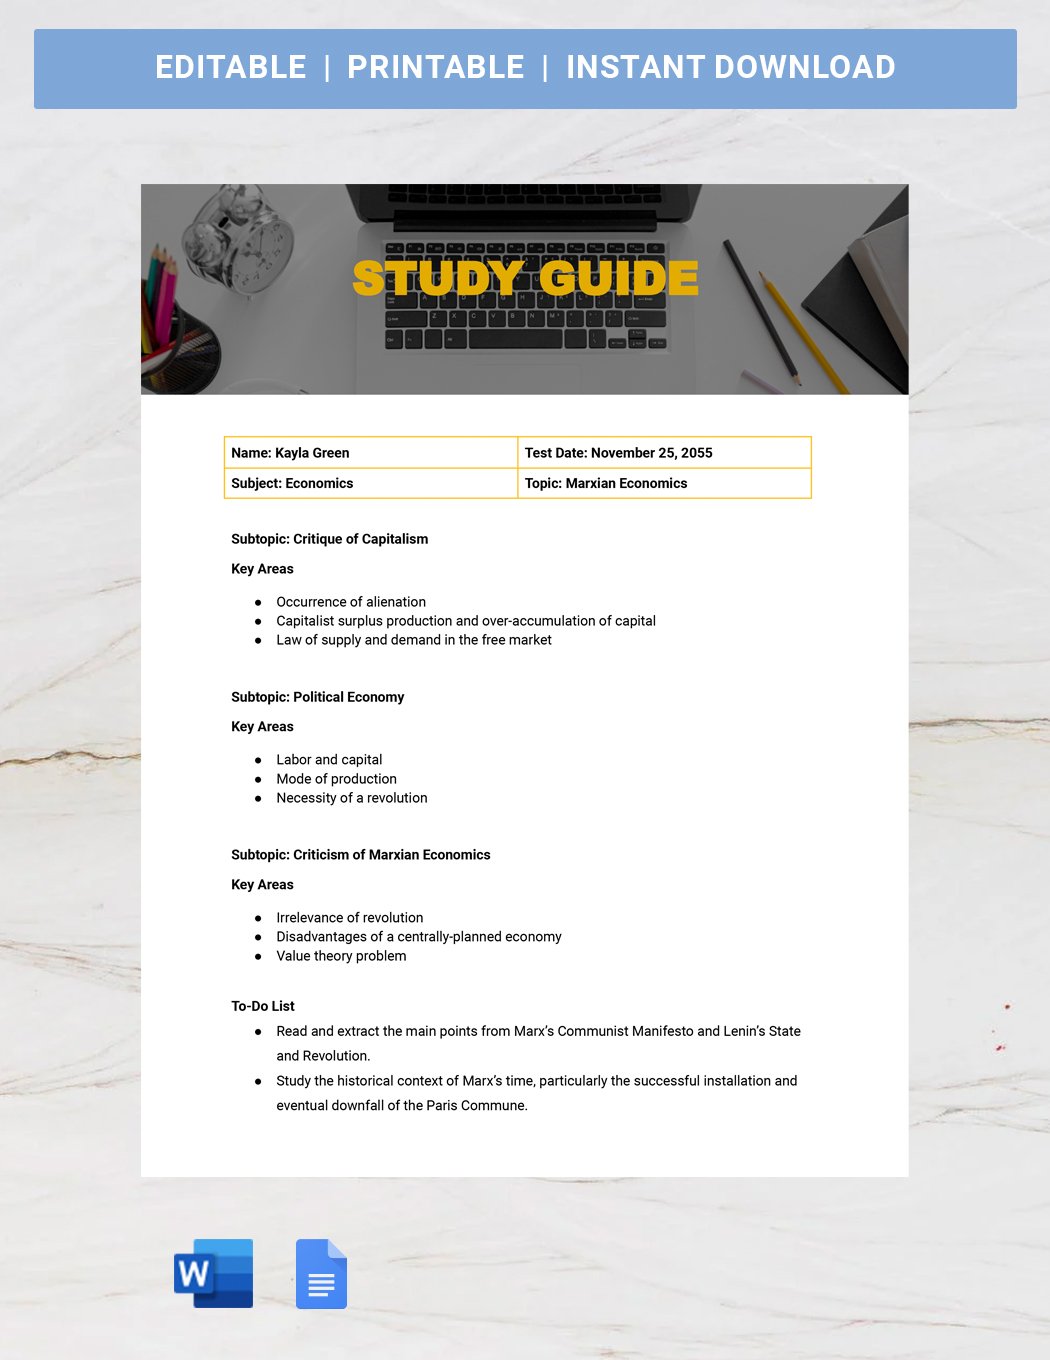 study guide presentation